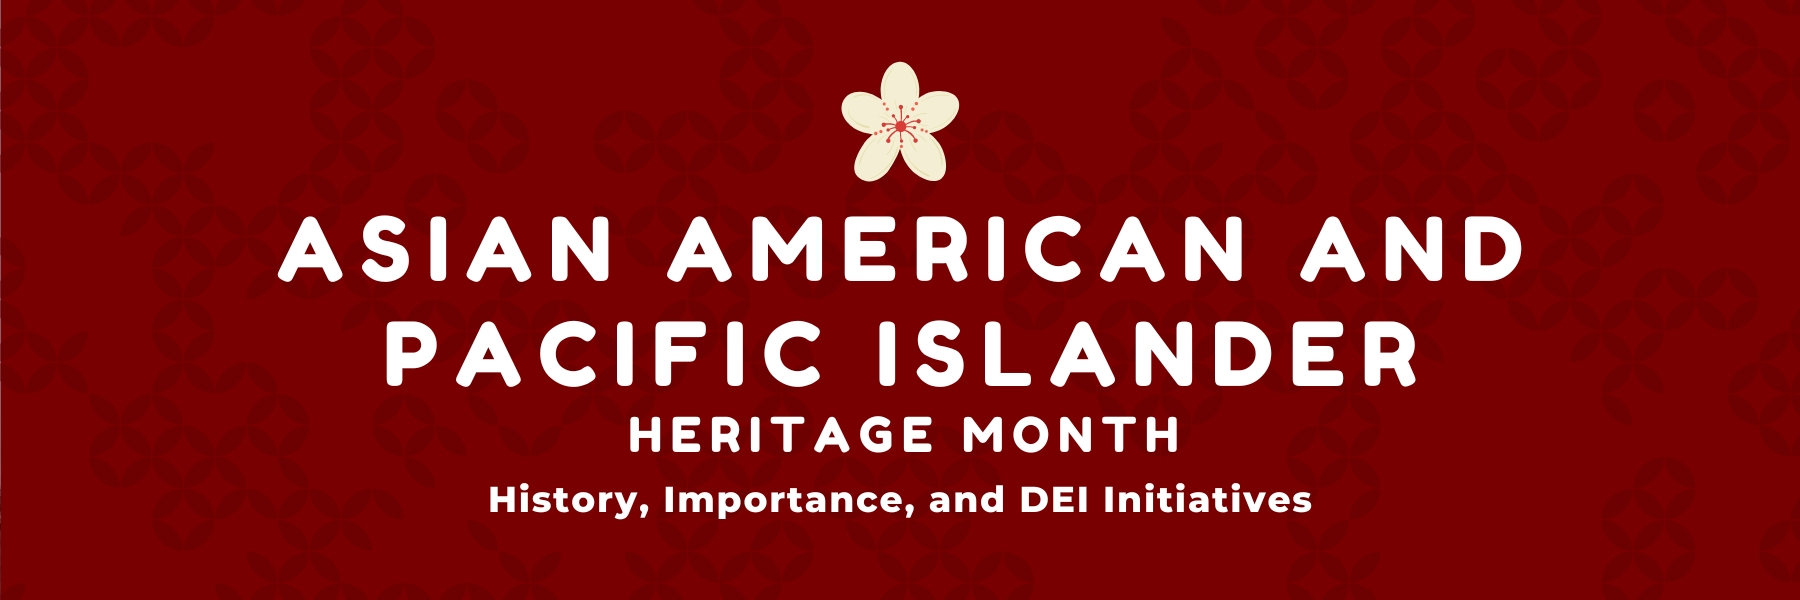 Asian American and Pacific Islander Heritage & DEI